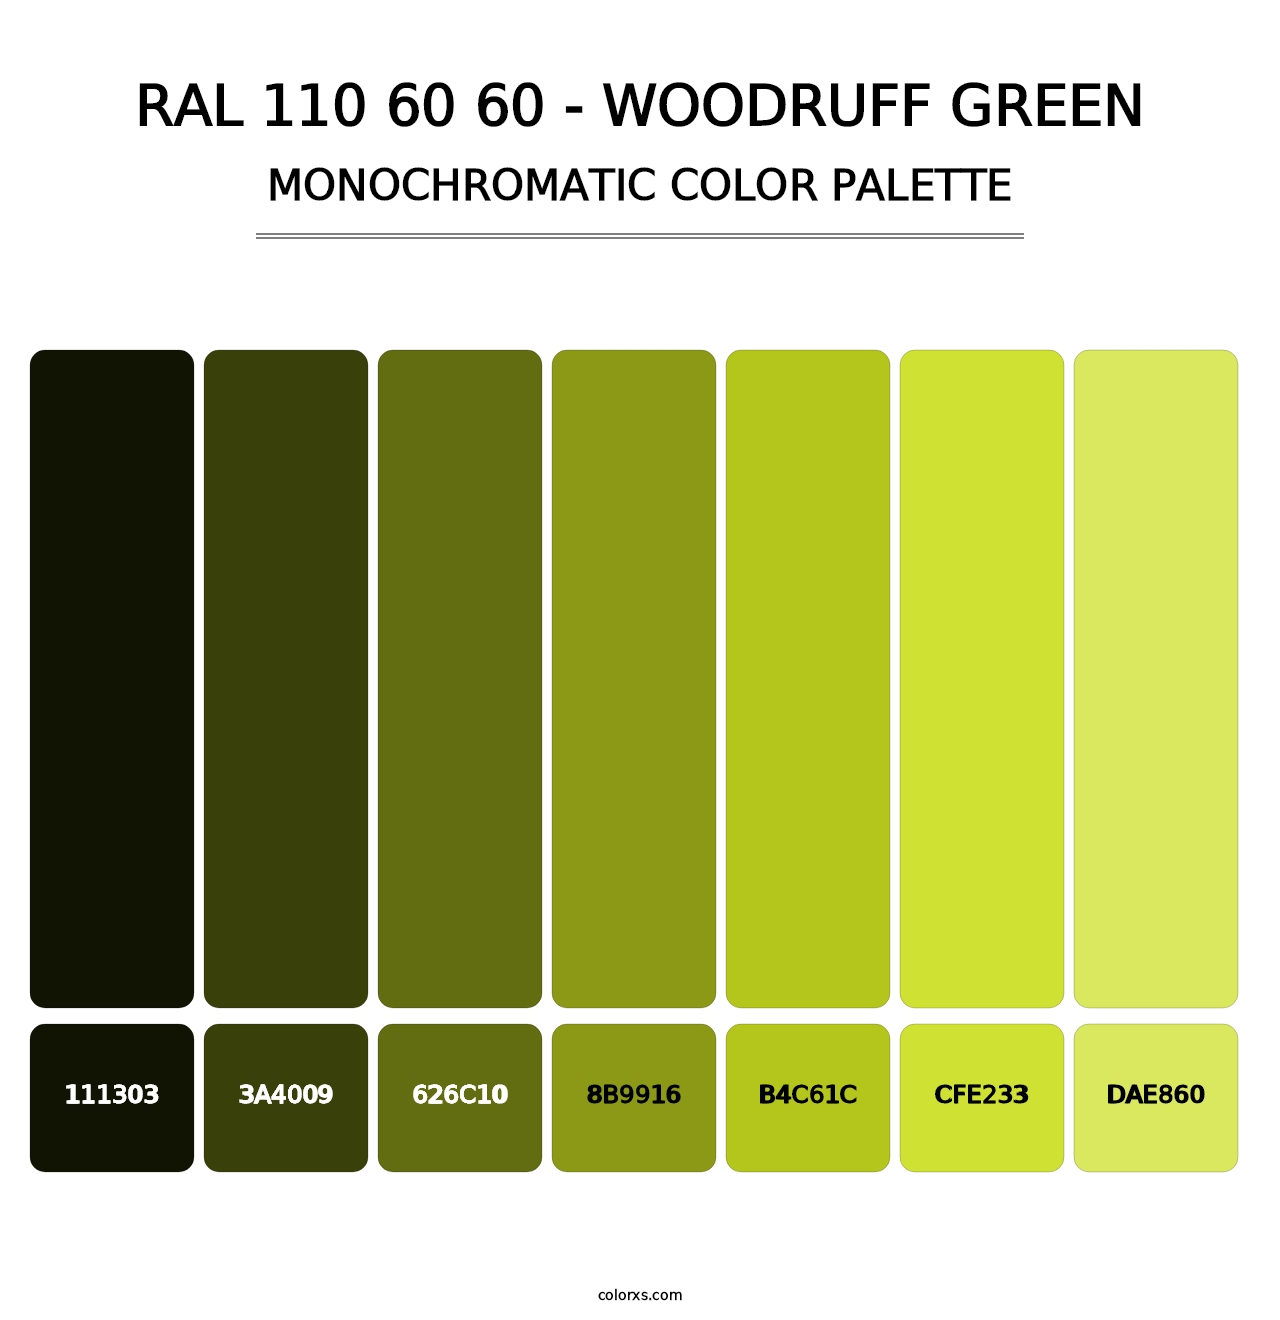 RAL 110 60 60 - Woodruff Green - Monochromatic Color Palette